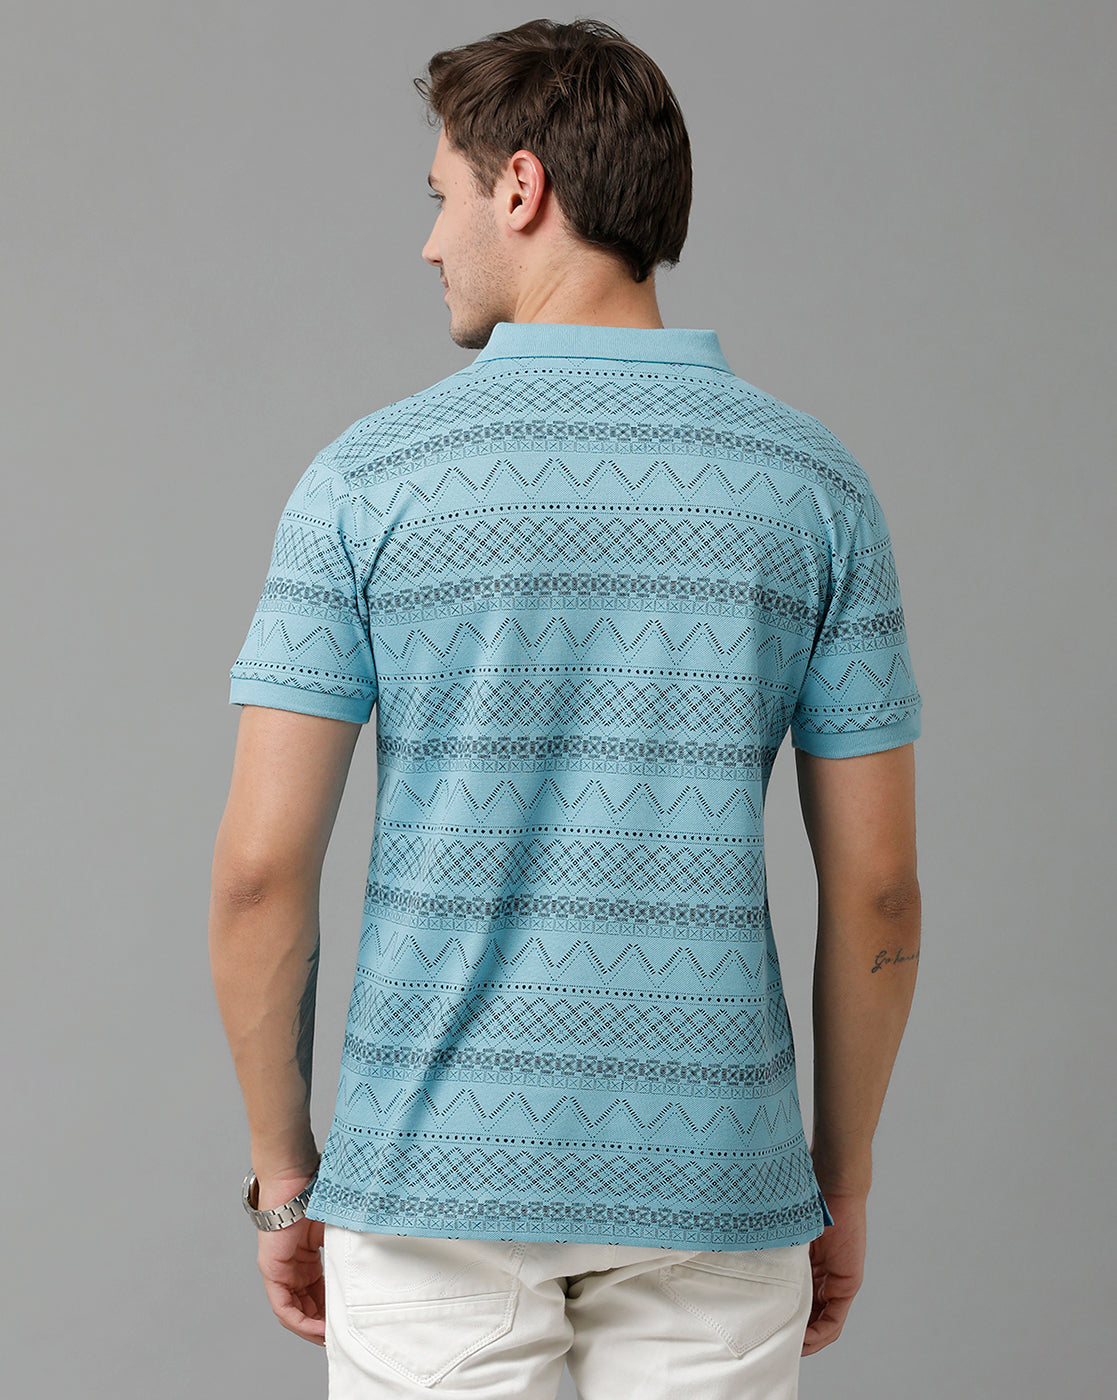 CP BRO Men's Cotton Half Sleeve Printed Slim Fit Polo Neck Blue Color T-Shirt | Brp - 355 A